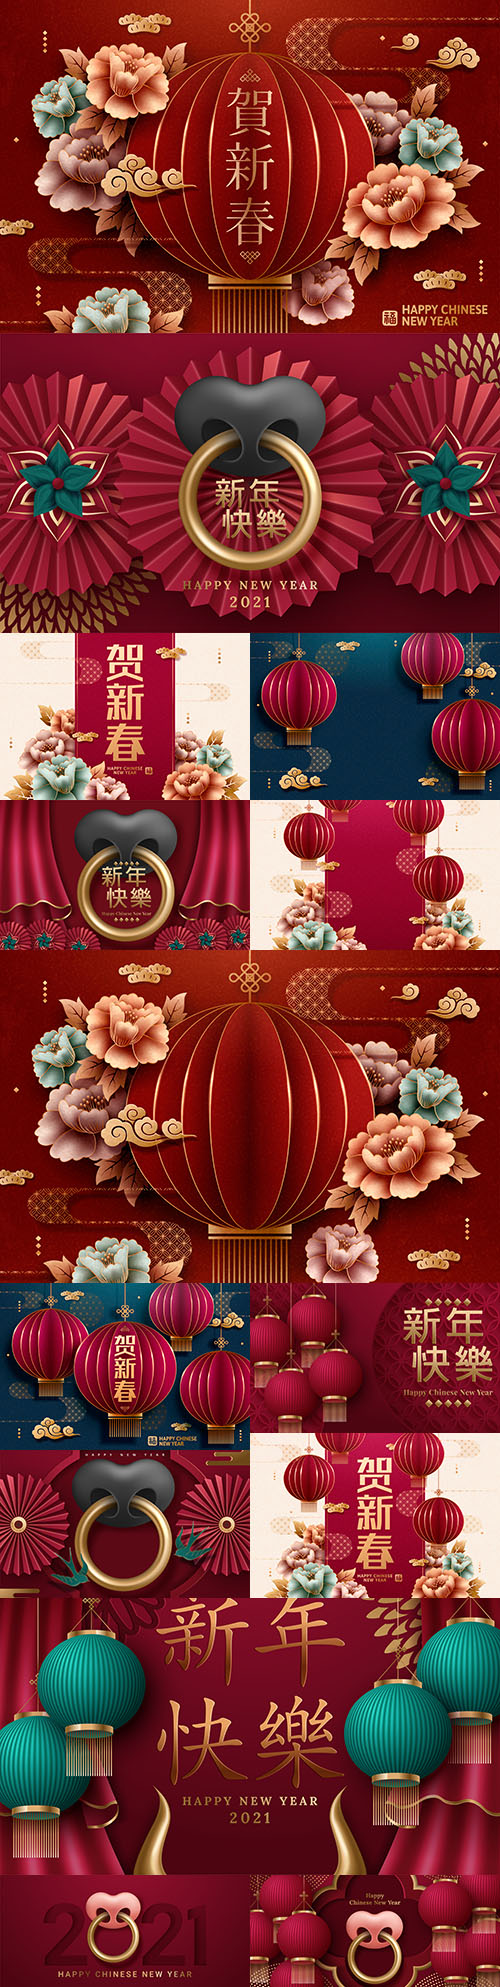 Happy Chinese New Year 2021 flower decorative design
